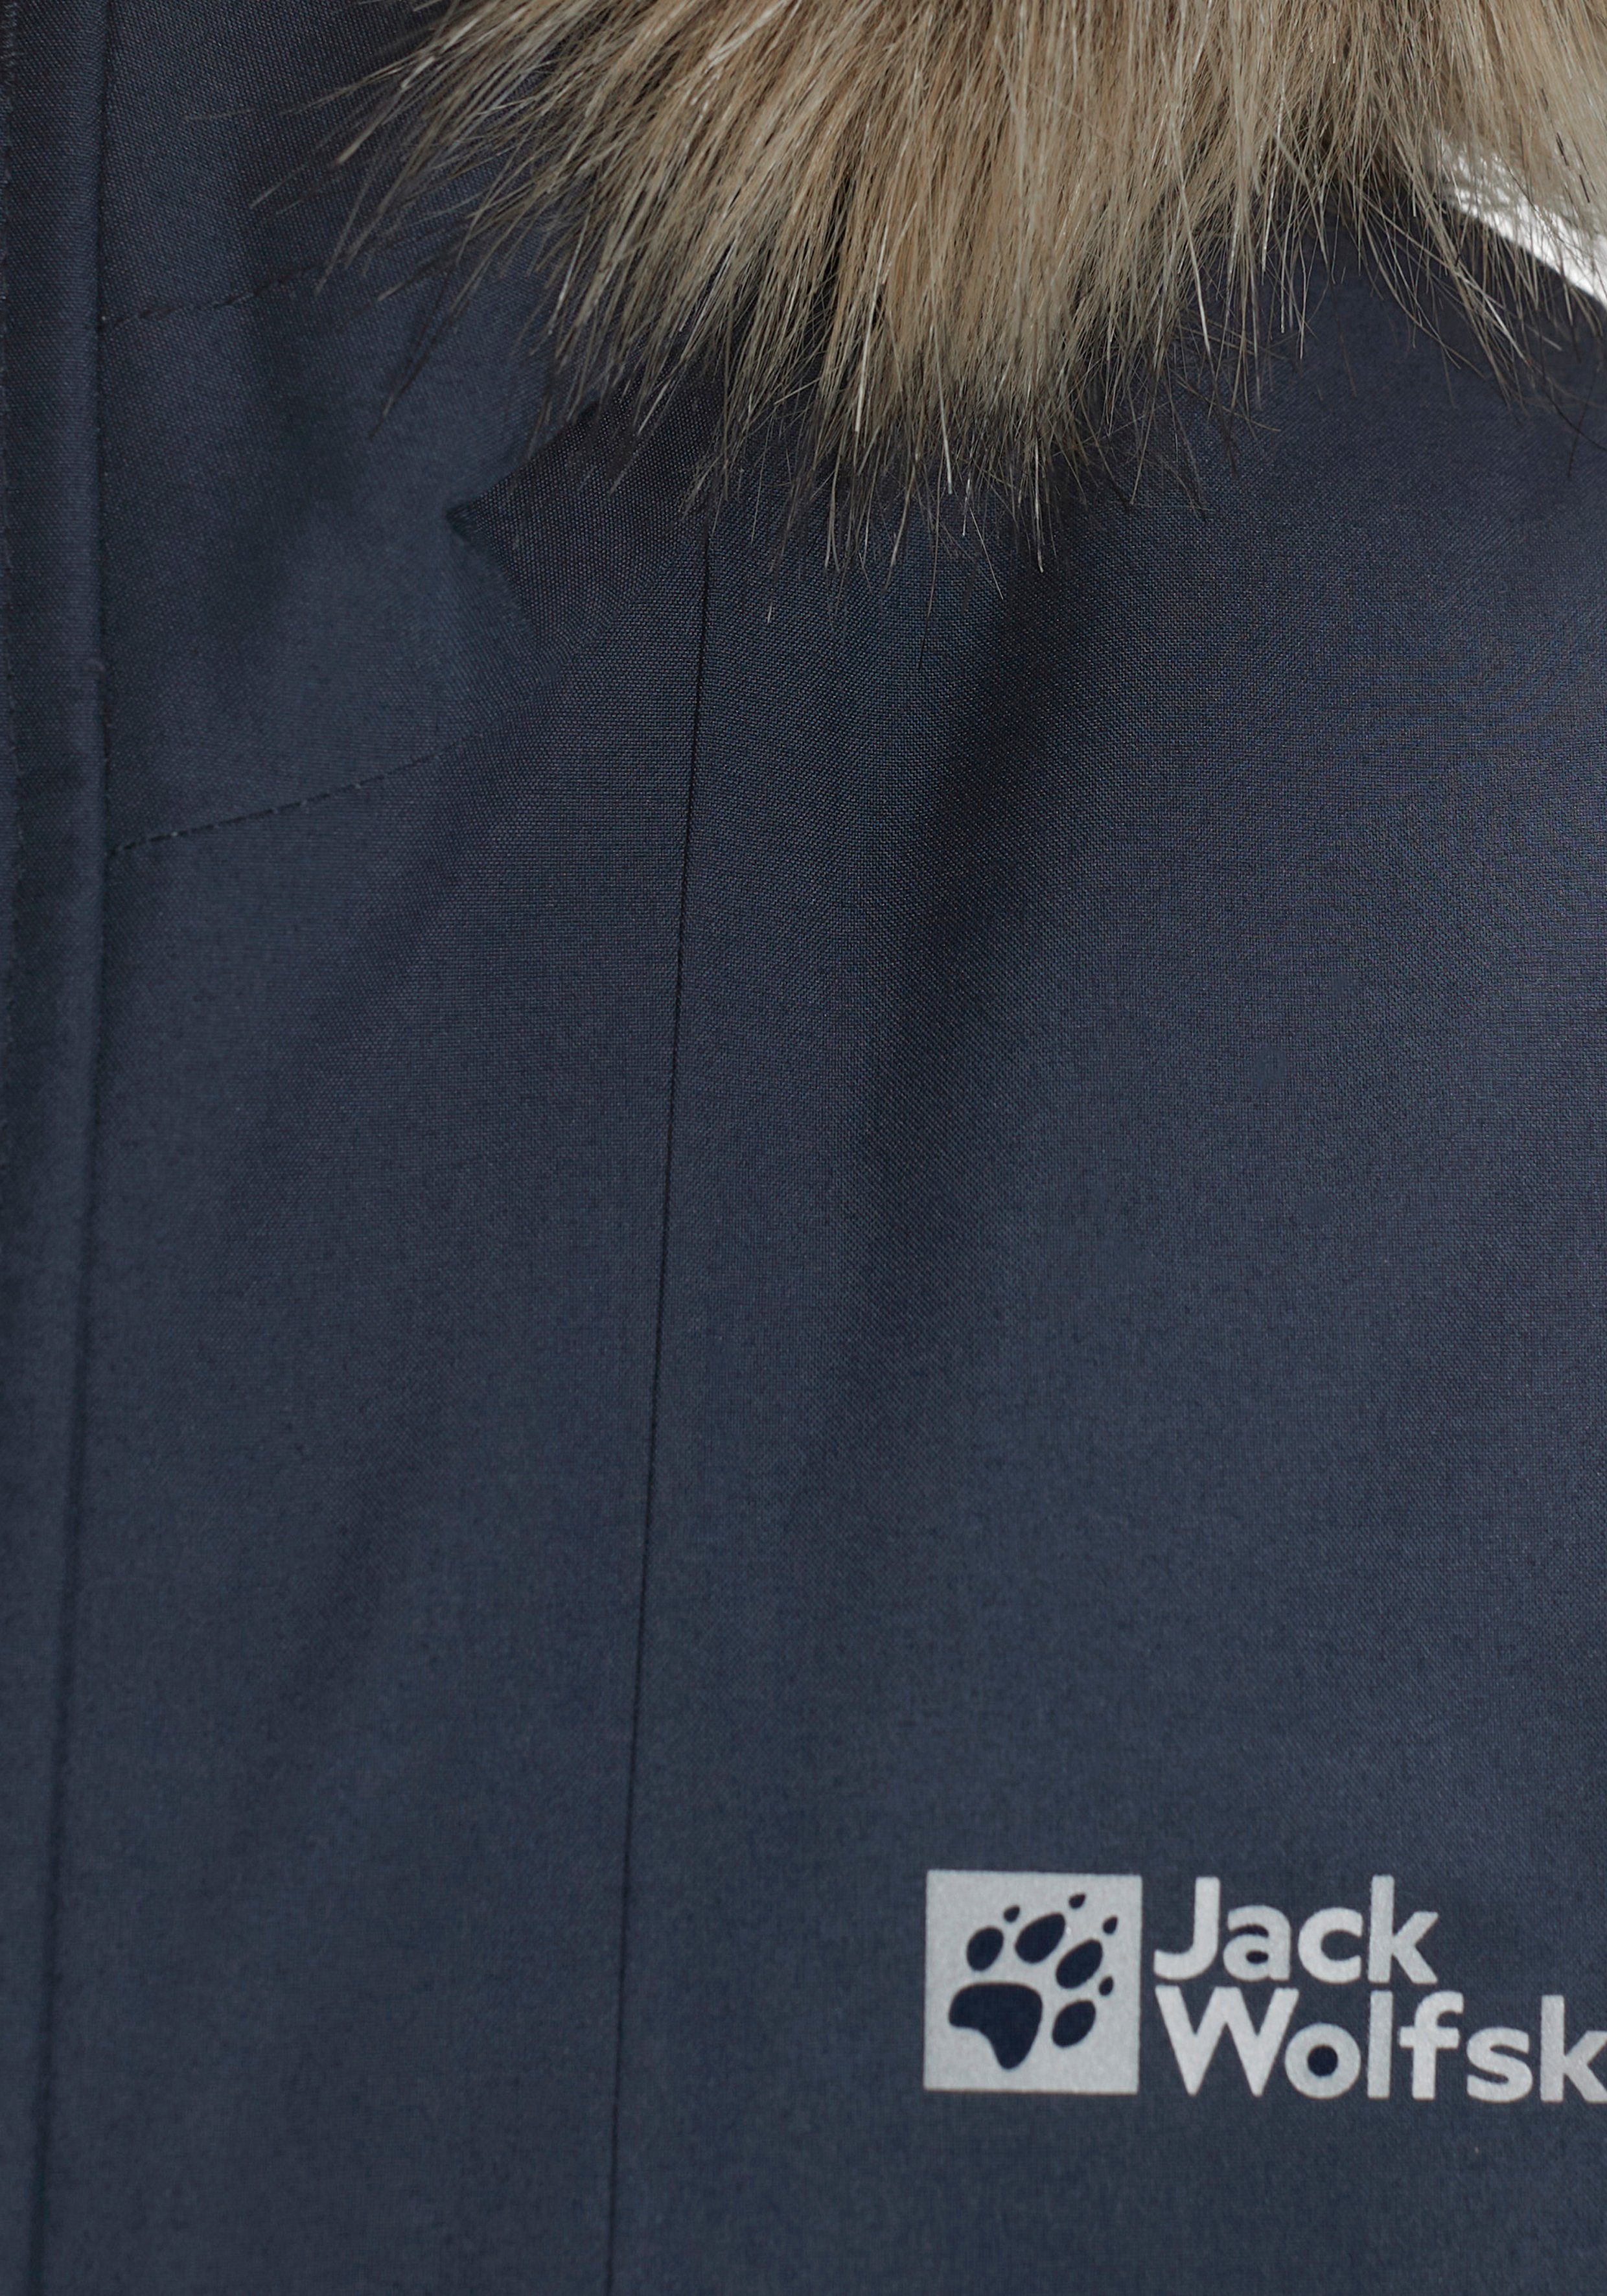 Jack Wolfskin Outdoorjacke COSY BEAR klassischen im Kinderparka Design K blue night langer, isolierender JACKET